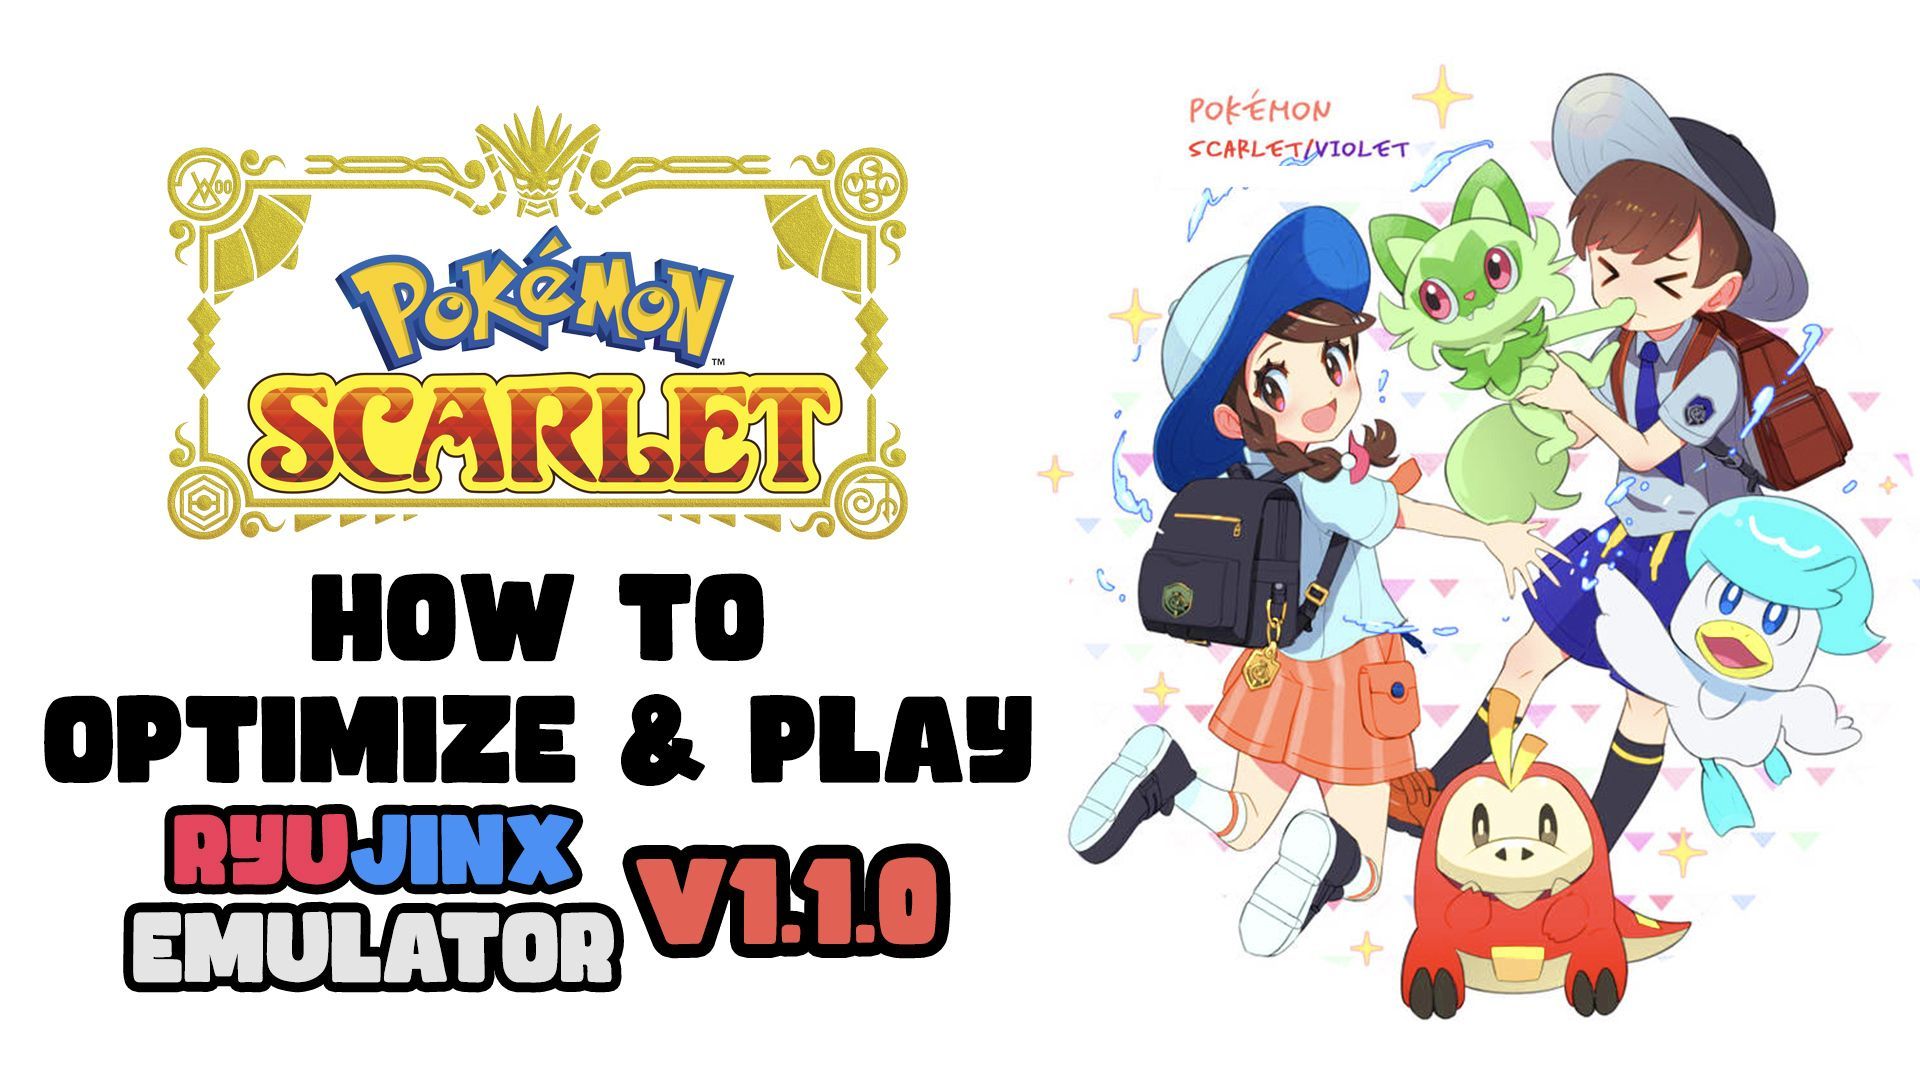 How to Download Yuzu Emulator for Pokémon Scarlet The Teal Mask DLC on PC  (XCI) - BiliBili